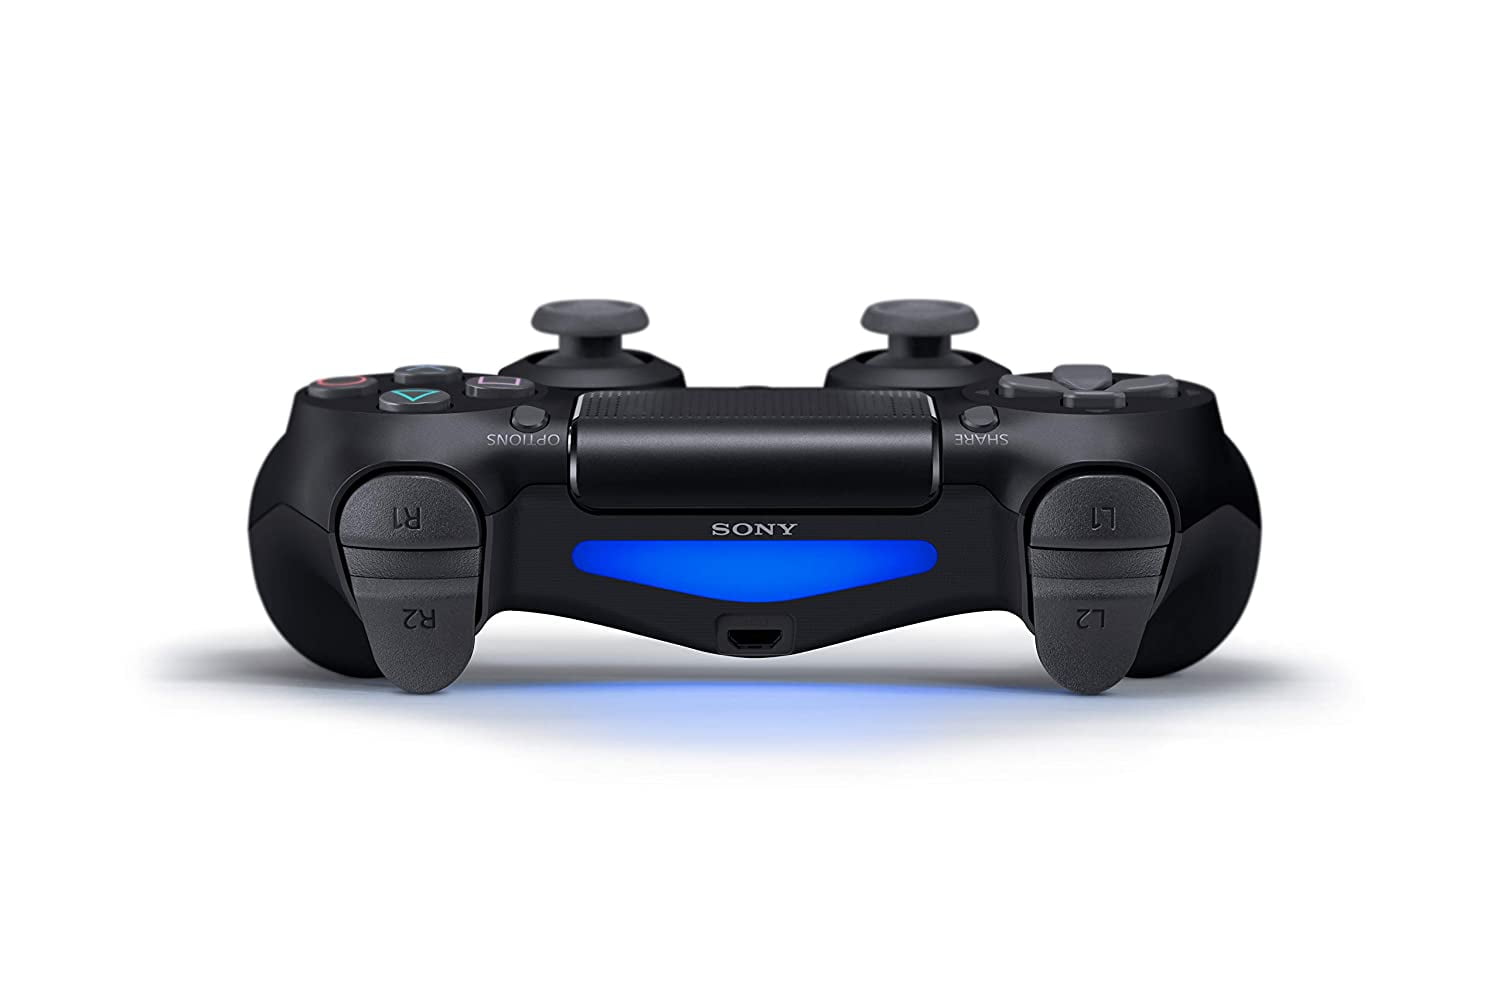 Sony PS4 DualShock 4 Wireless Controller - Jet Black - Walmart.com